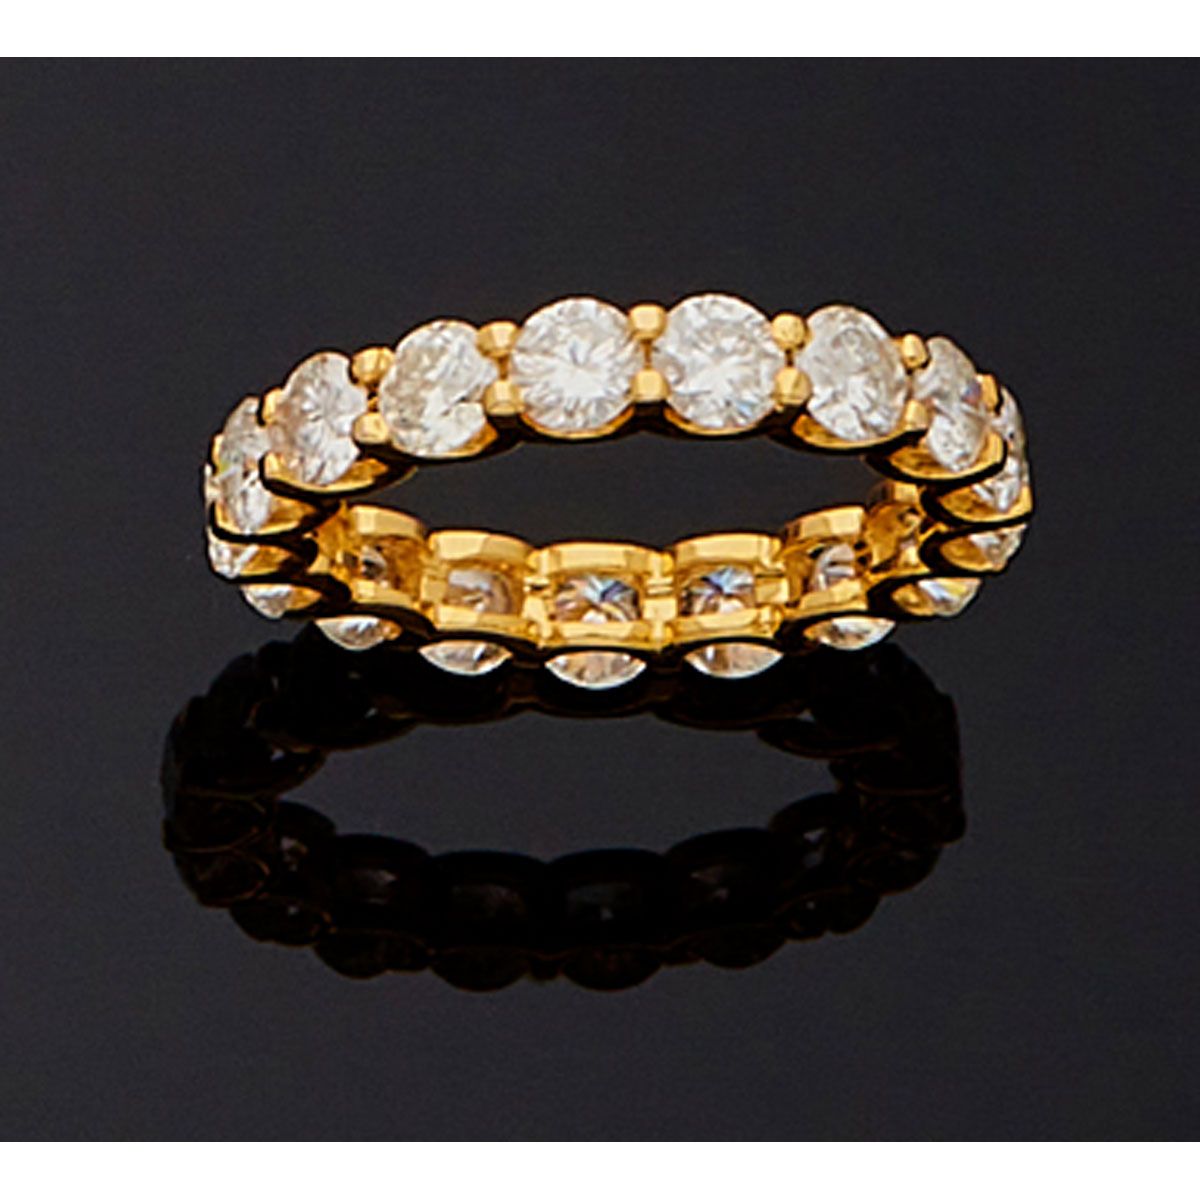 Null 18K黄金结婚戒指，镶嵌17颗钻石，每颗0.23克拉。

B.P. 3.45克。- TDD 56